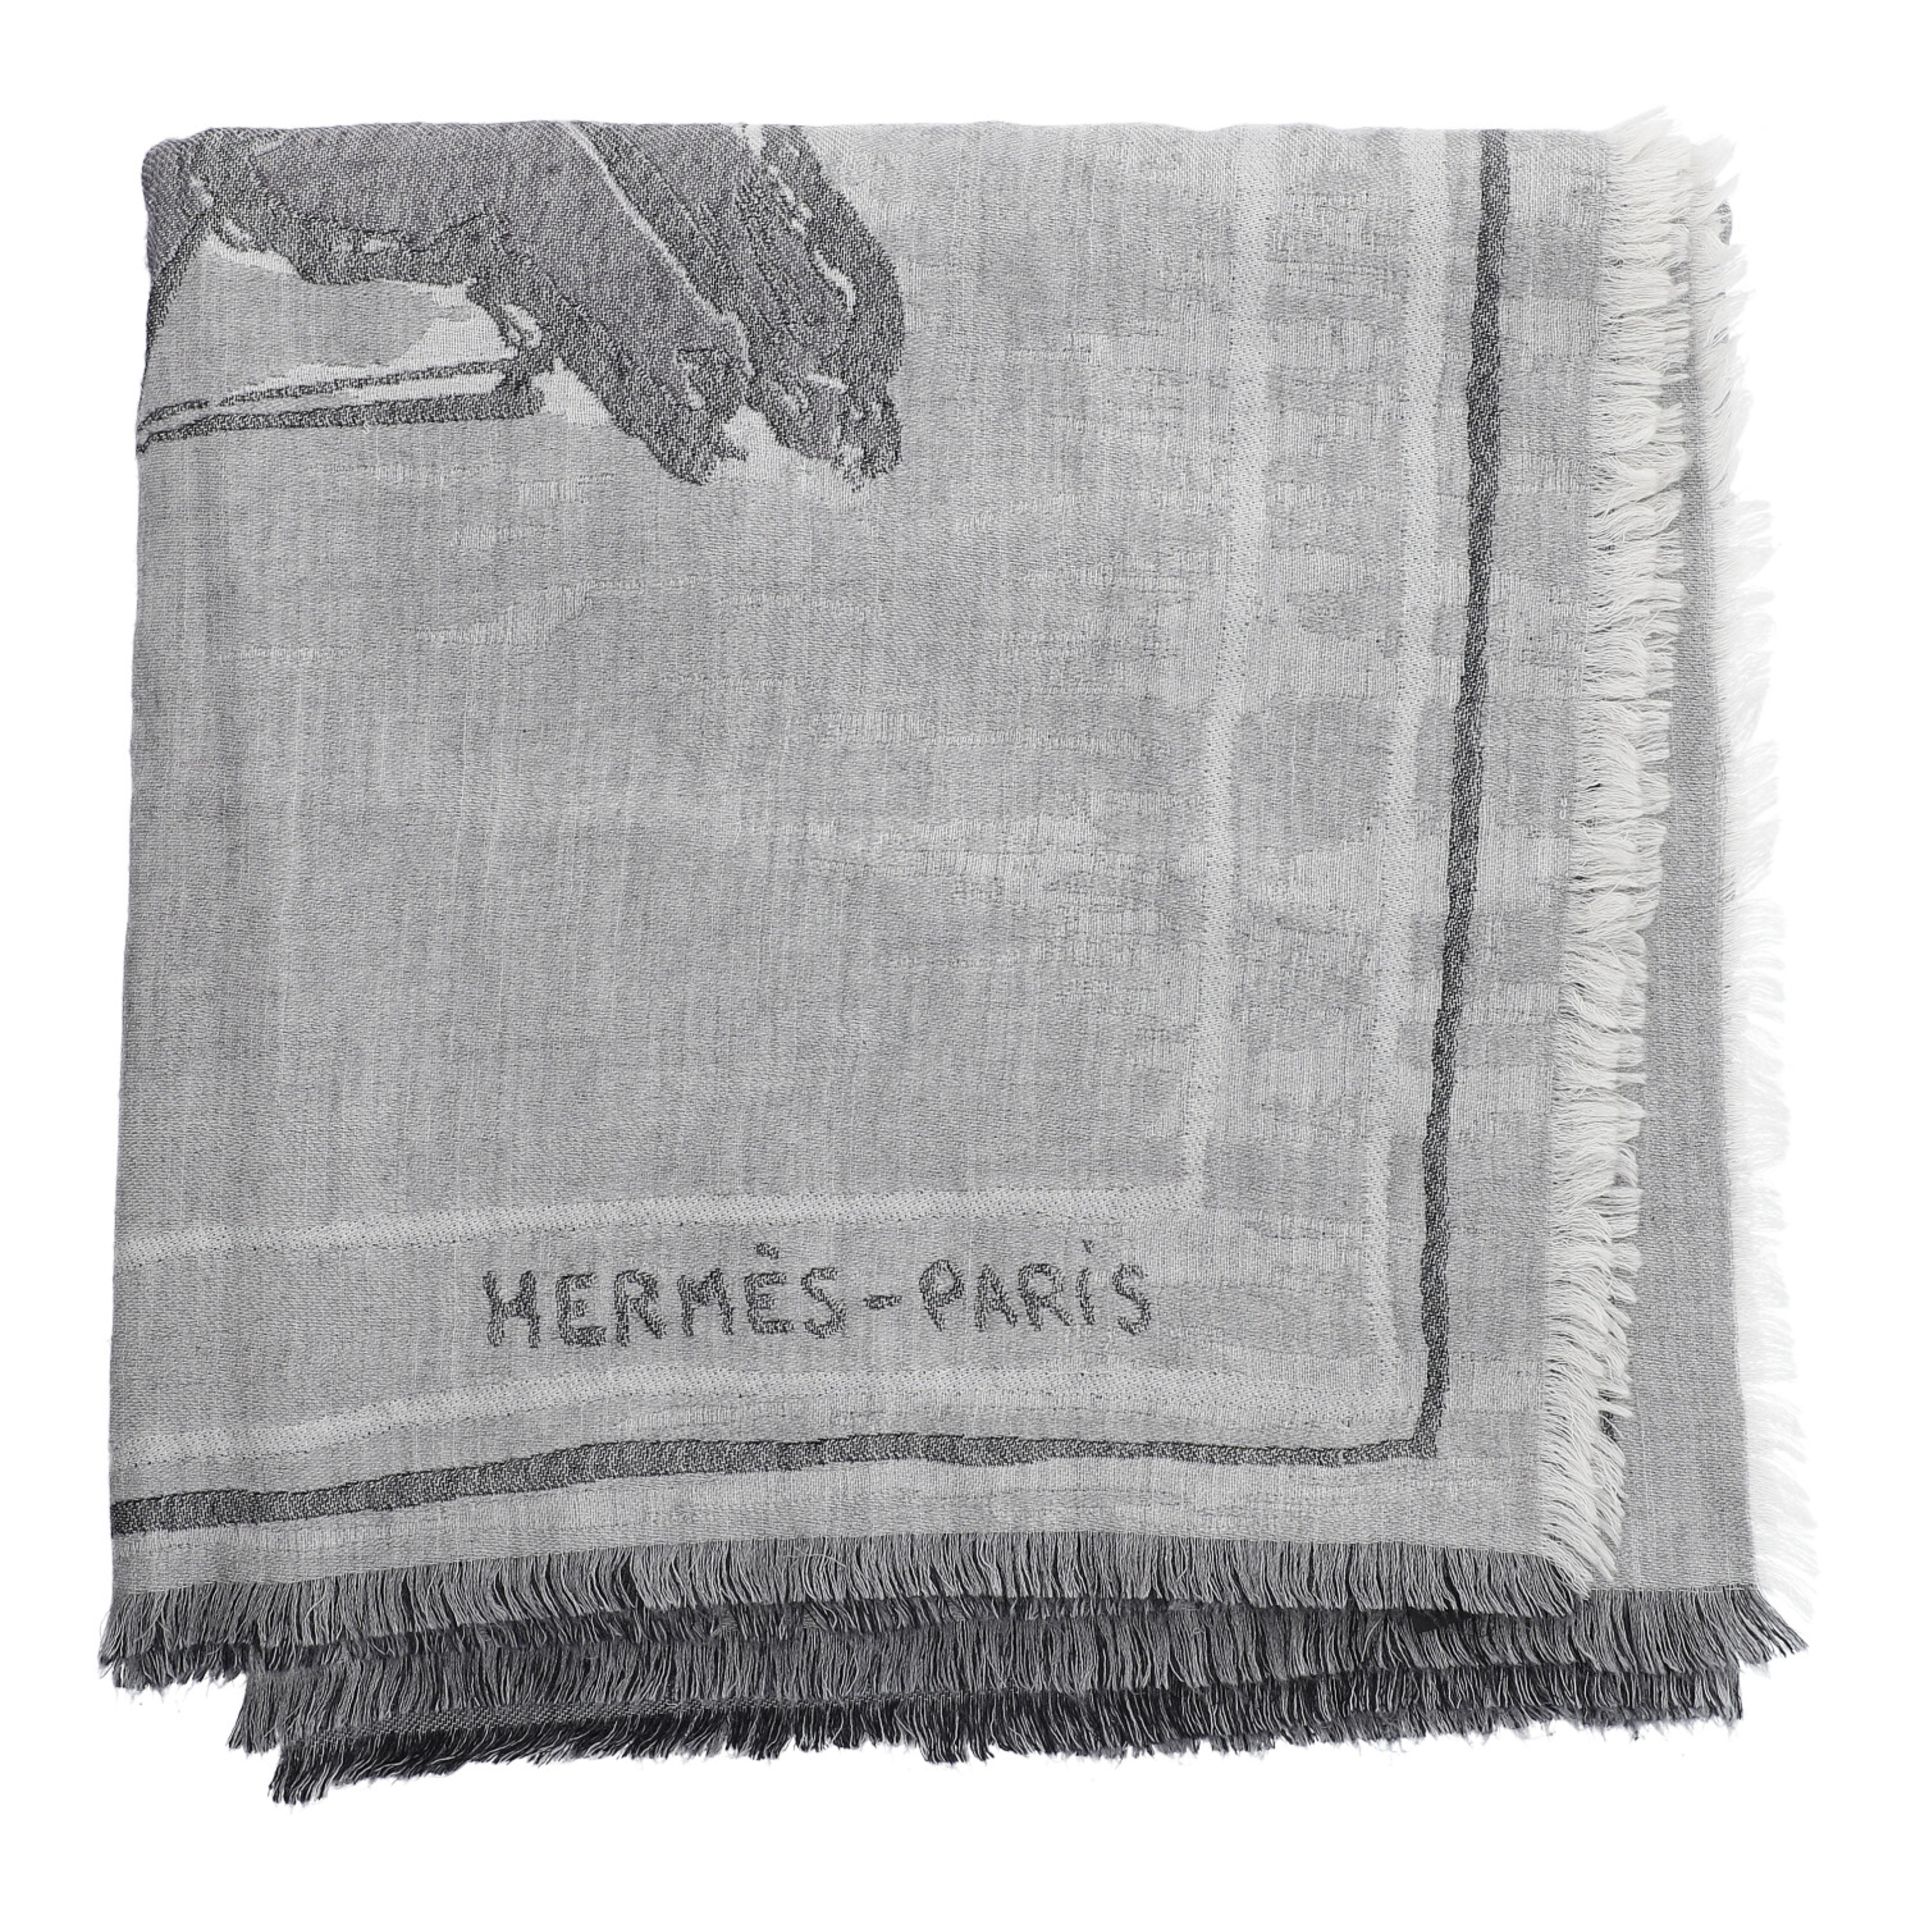 HERMÈS Schal. - Image 3 of 3